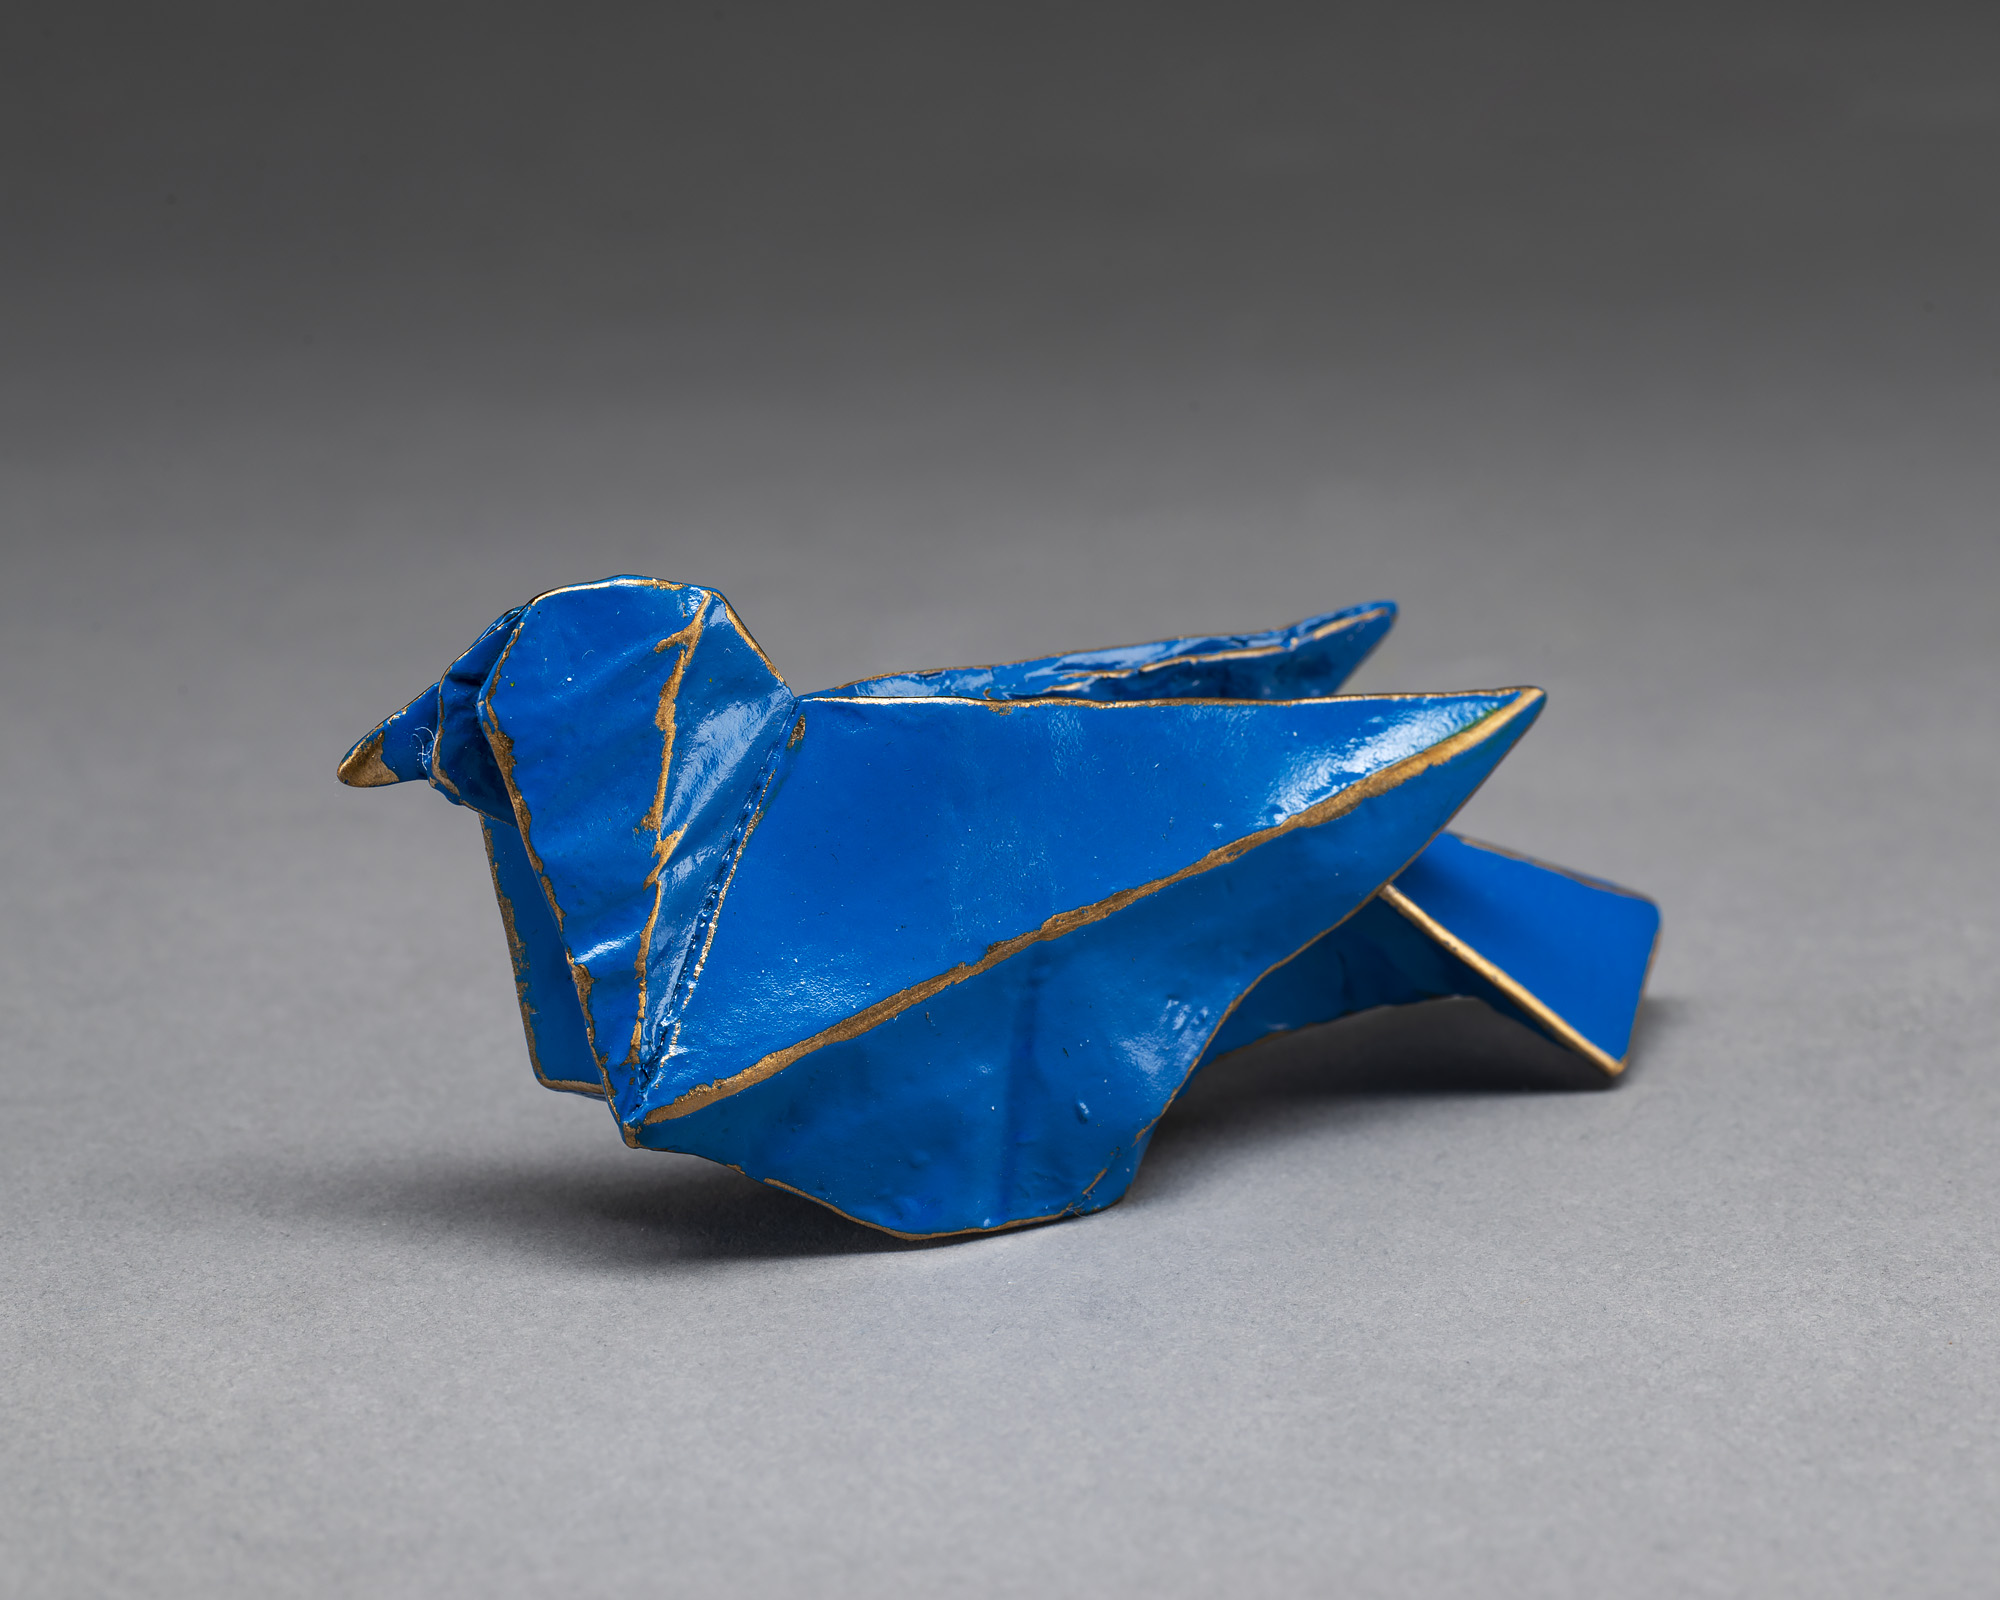 blue origami bird sculpture